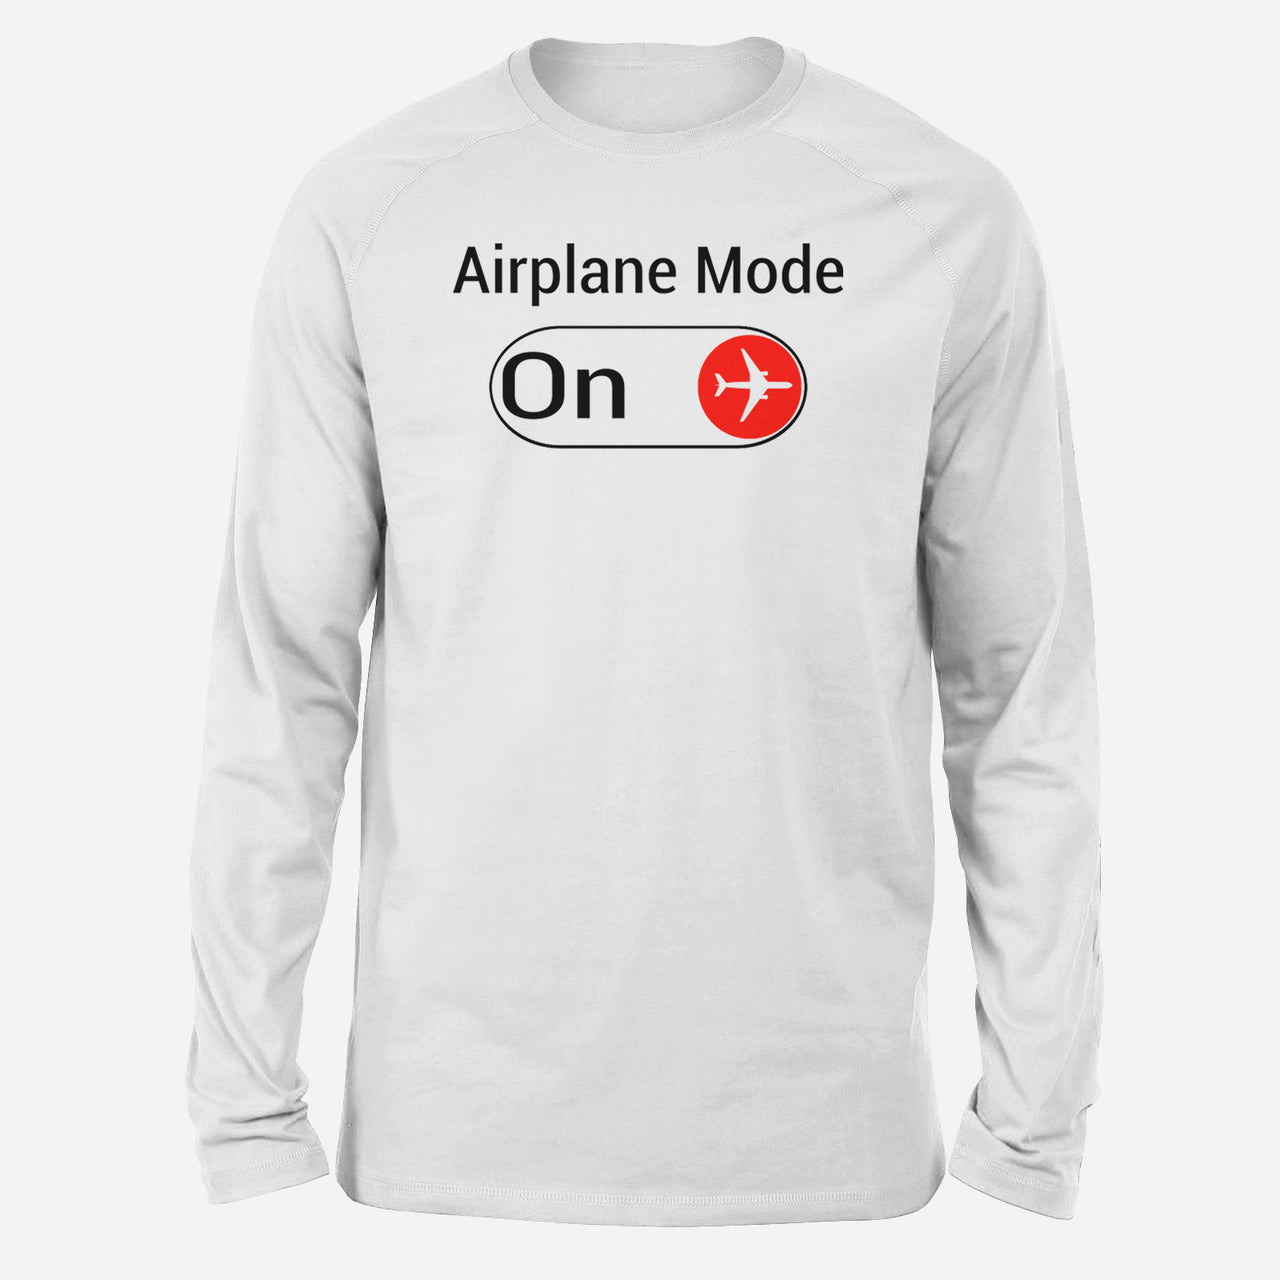 Airplane Mode On Designed Long-Sleeve T-Shirts